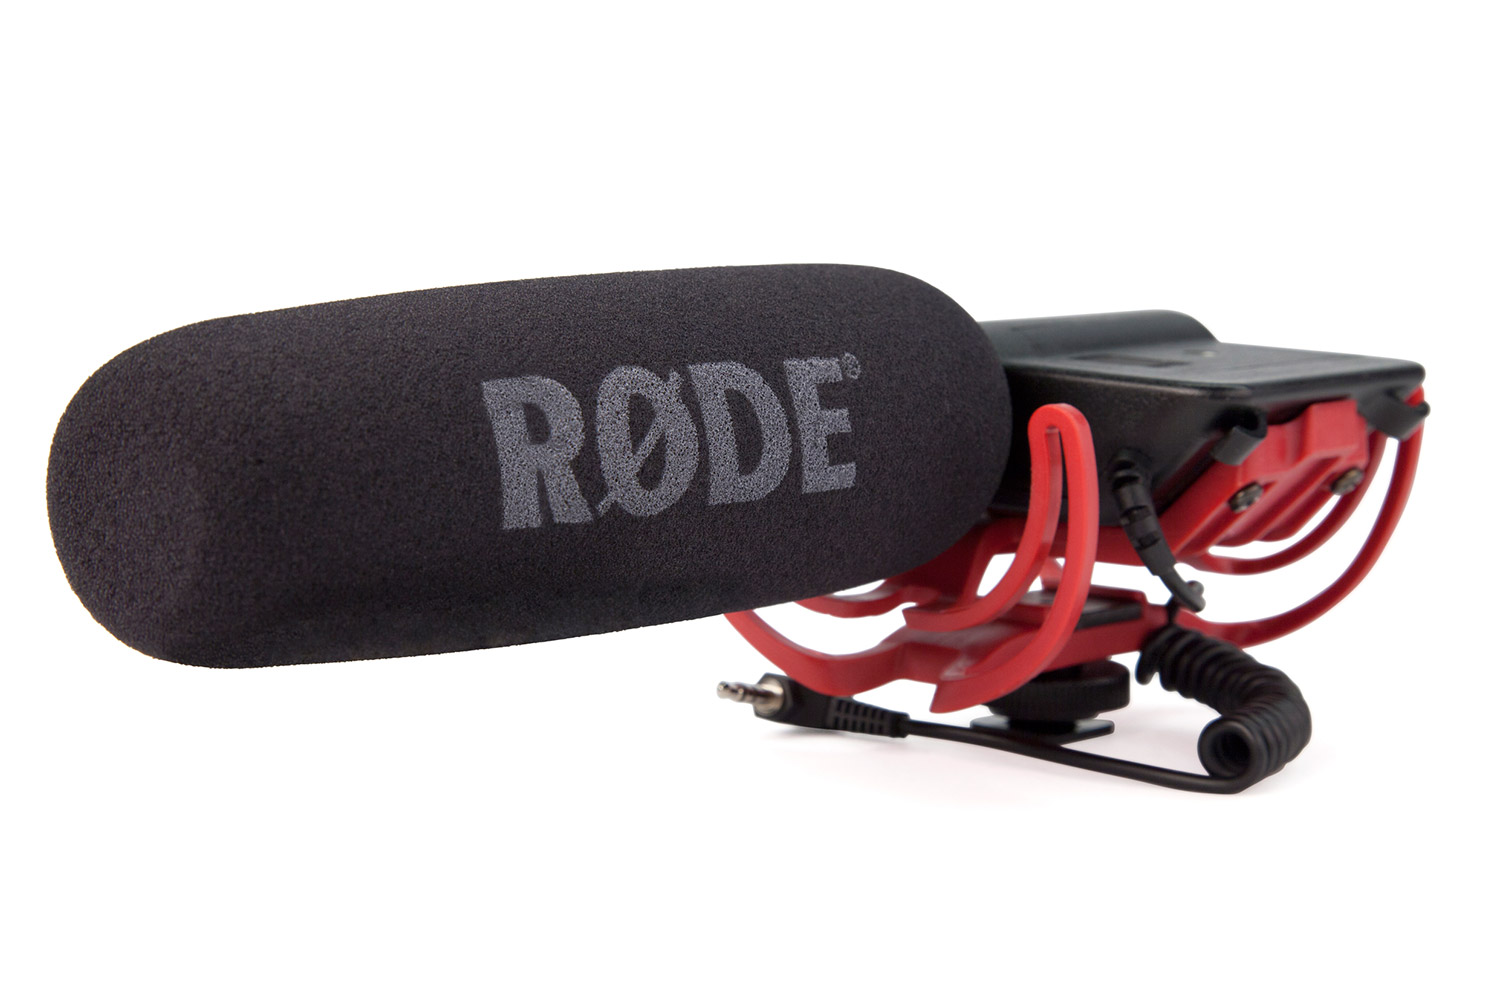 Rode VideoMic Rycote по цене 10 260 ₽